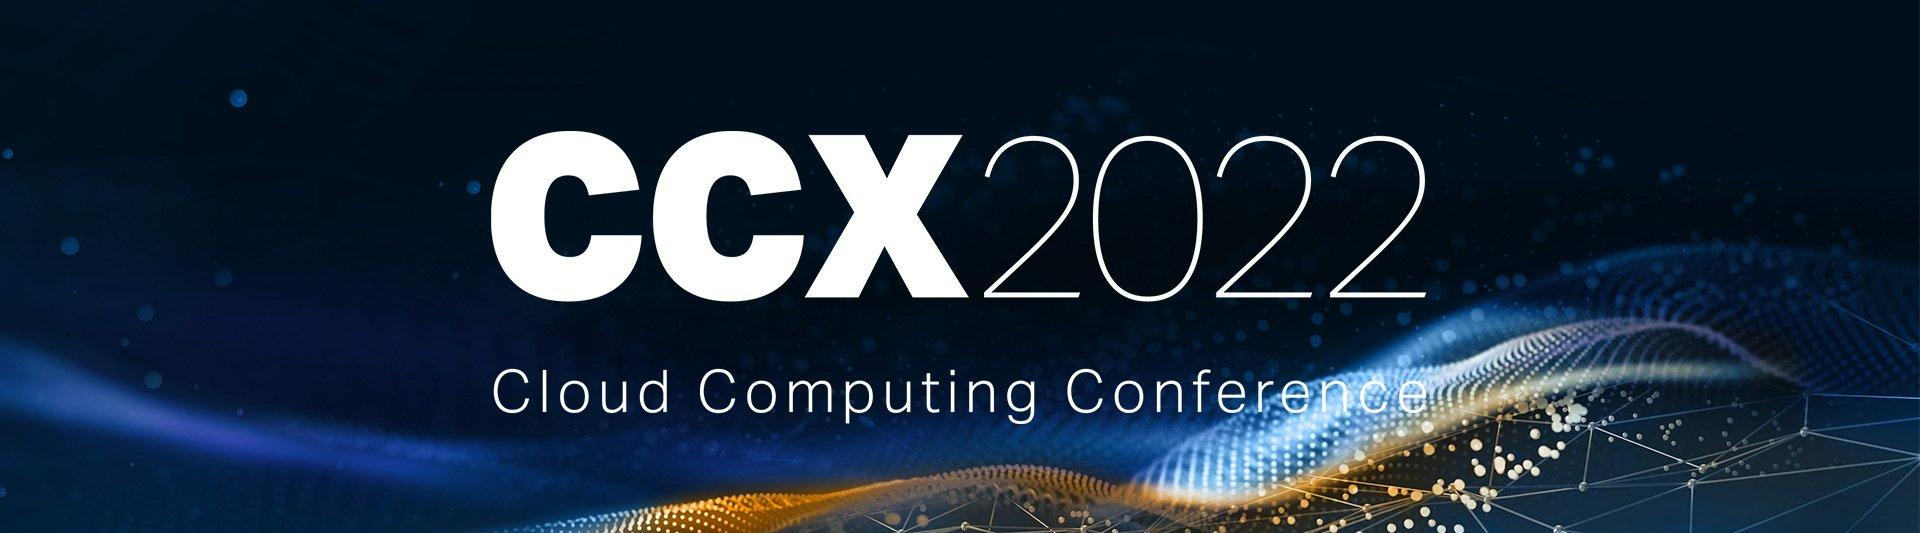 CCX Cloud Computing Virtual Conference 2021 Header